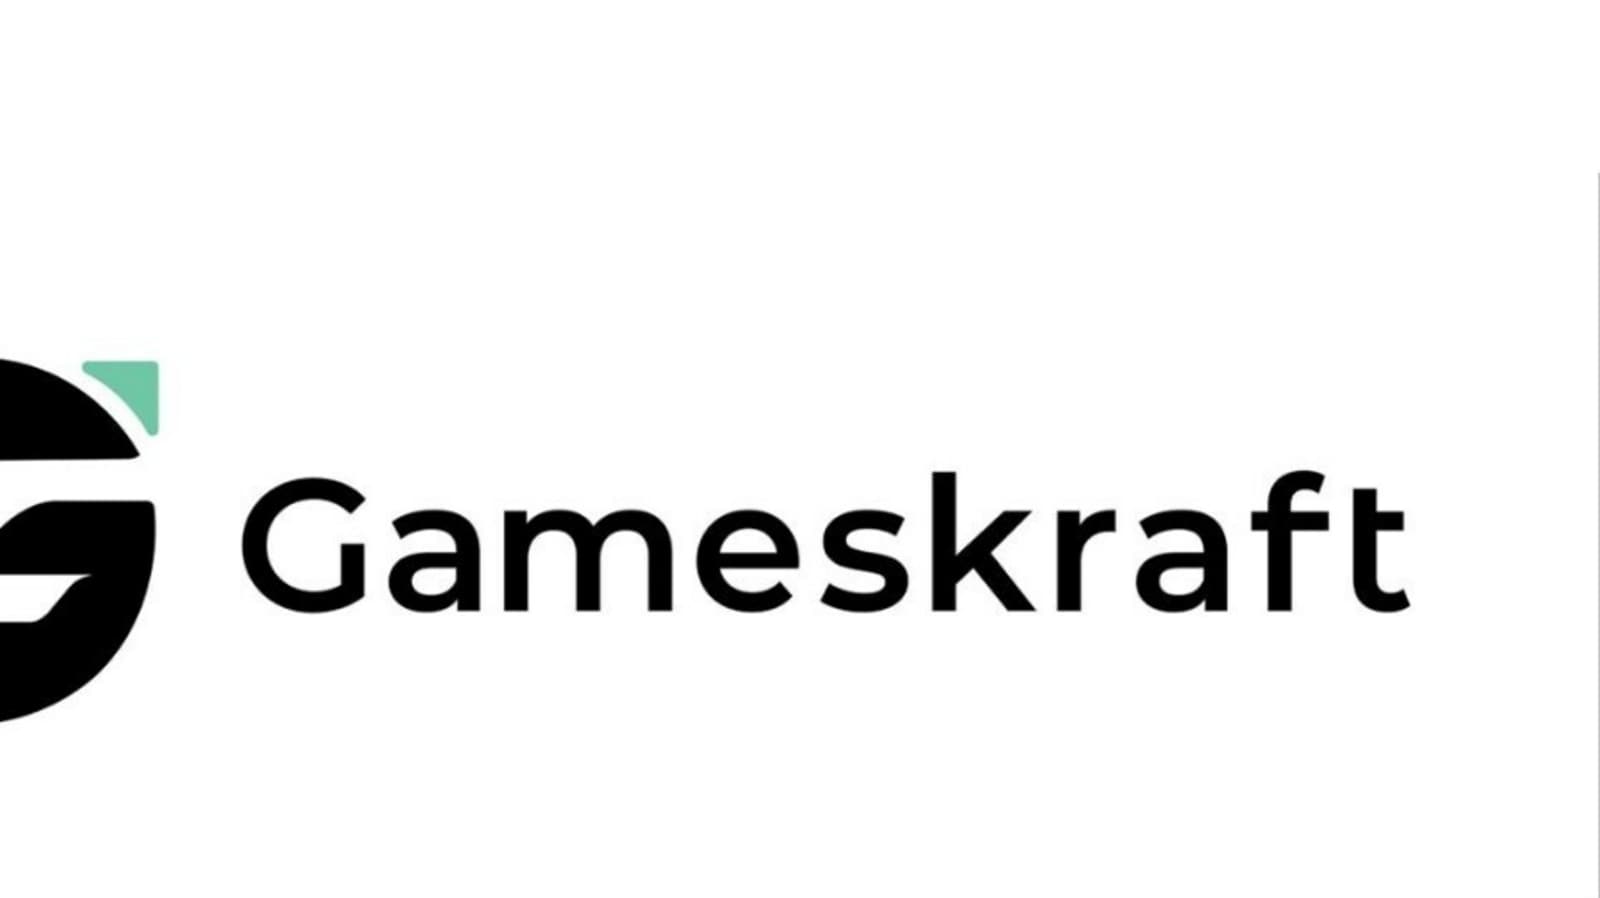 Gameskraft, a Bengaluru-based online gaming company, acquires land in Gurugram for ₹90 crore